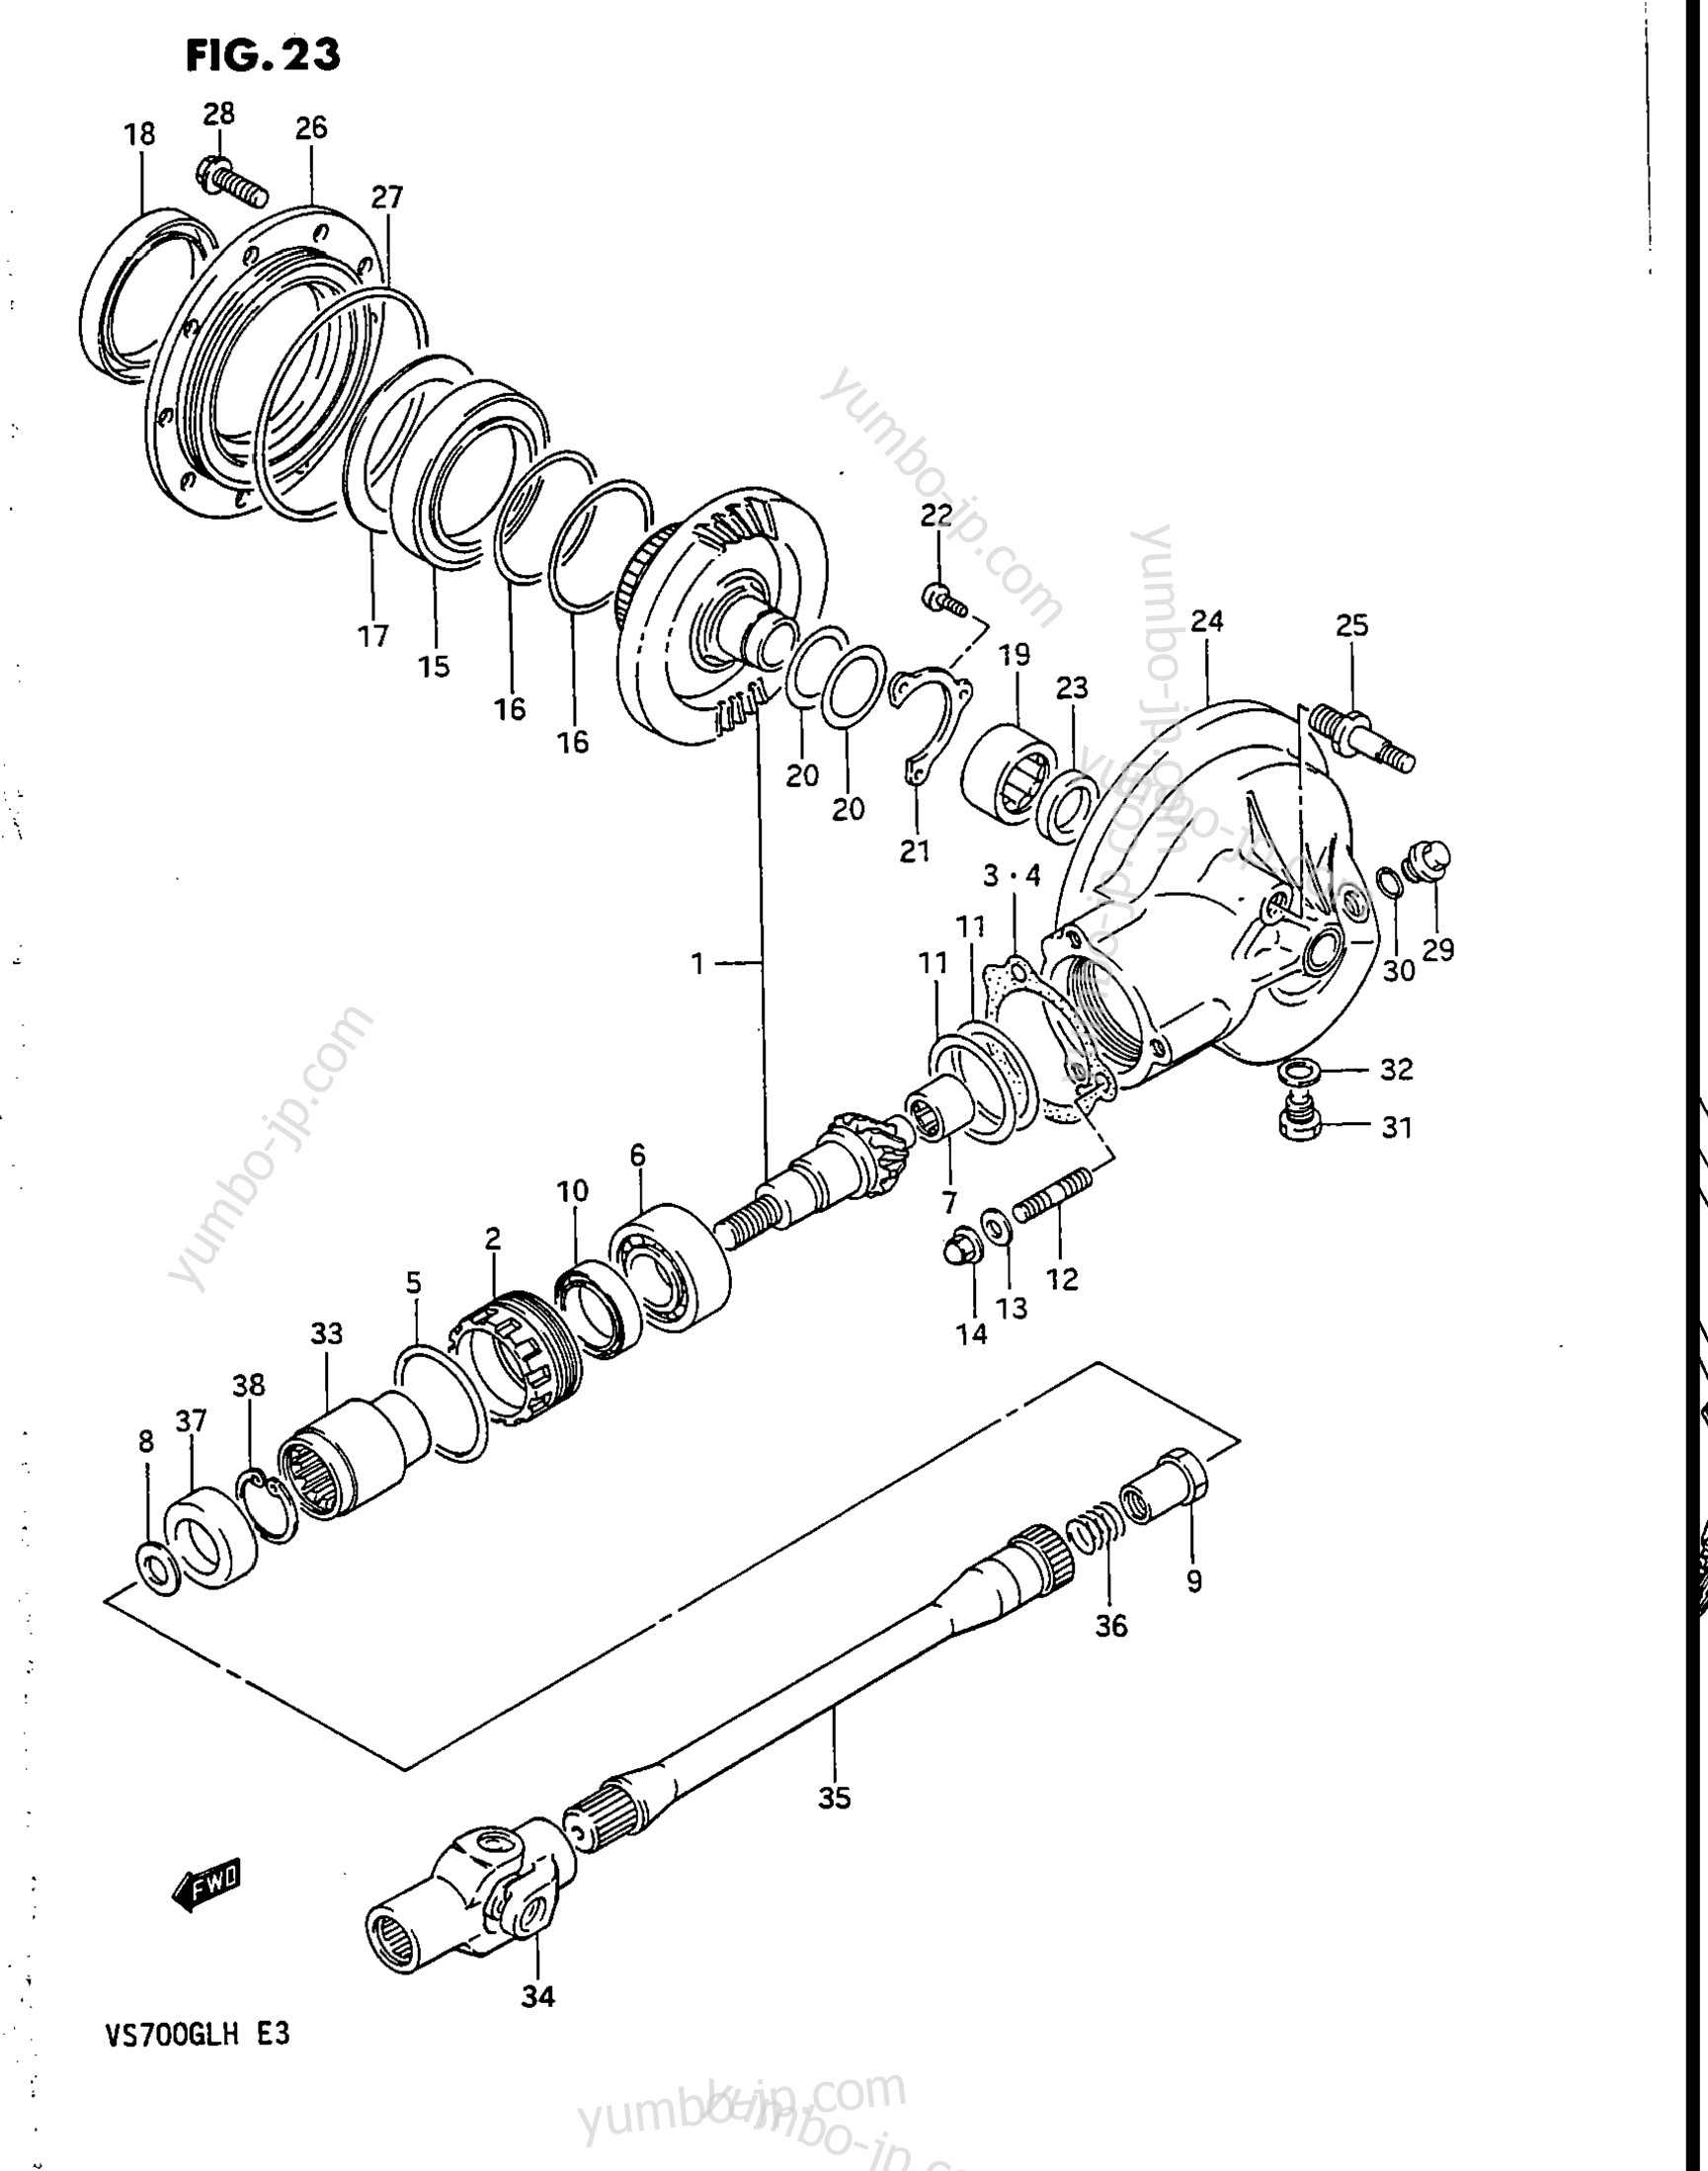 PROPELLER SHAFT - FINAL DRIVE GEAR for motorcycles SUZUKI Intruder (VS700GLEF) 1986 year